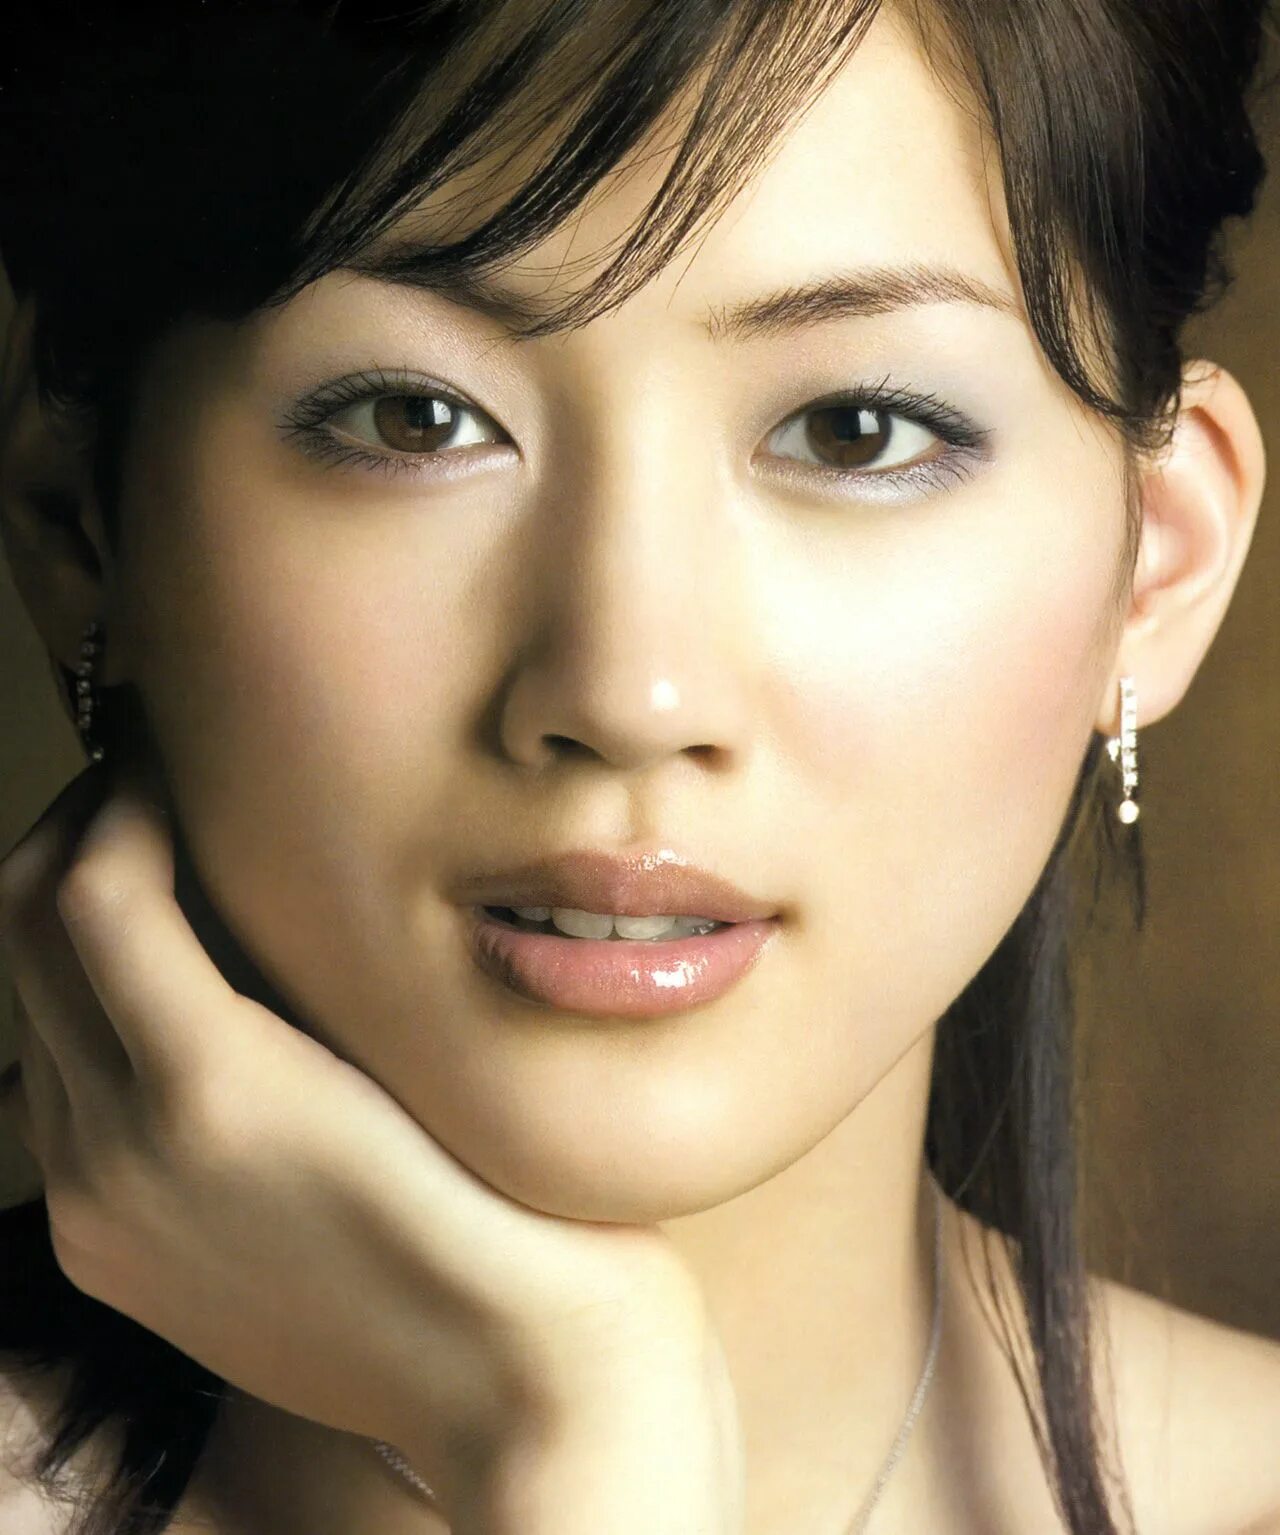 Харука аясэ. Харука Аясэ (Haruka Ayase). Харука Аясэ +18. Японская актриса Харука Аясе.